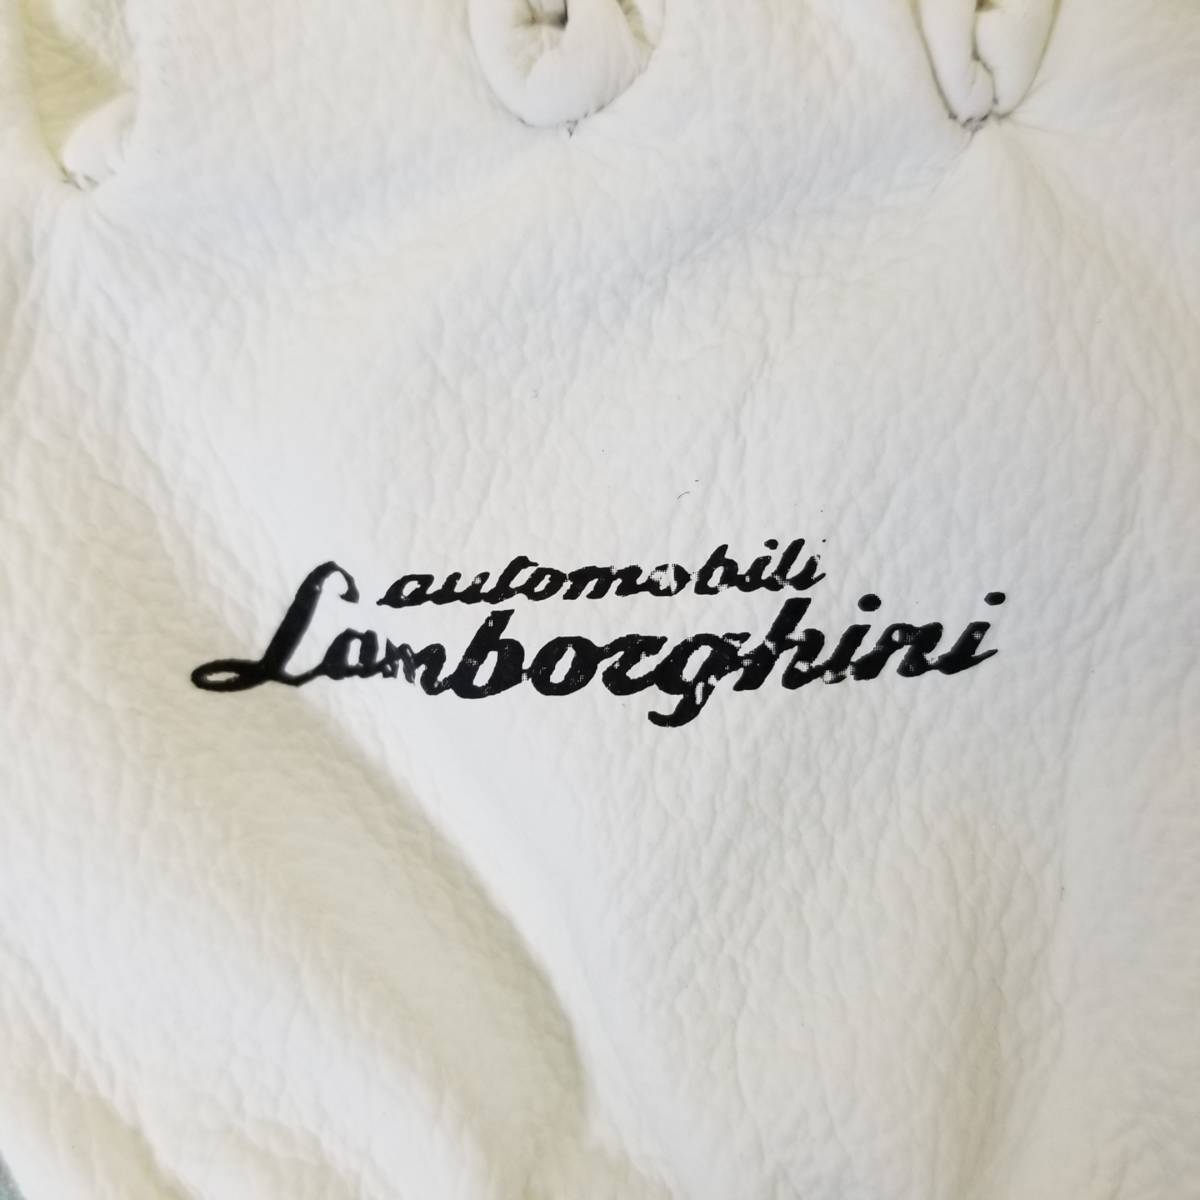  Lamborghini original Aventador loaded tool Work glove gloves army hand tool kit white present accessory collection ku-3